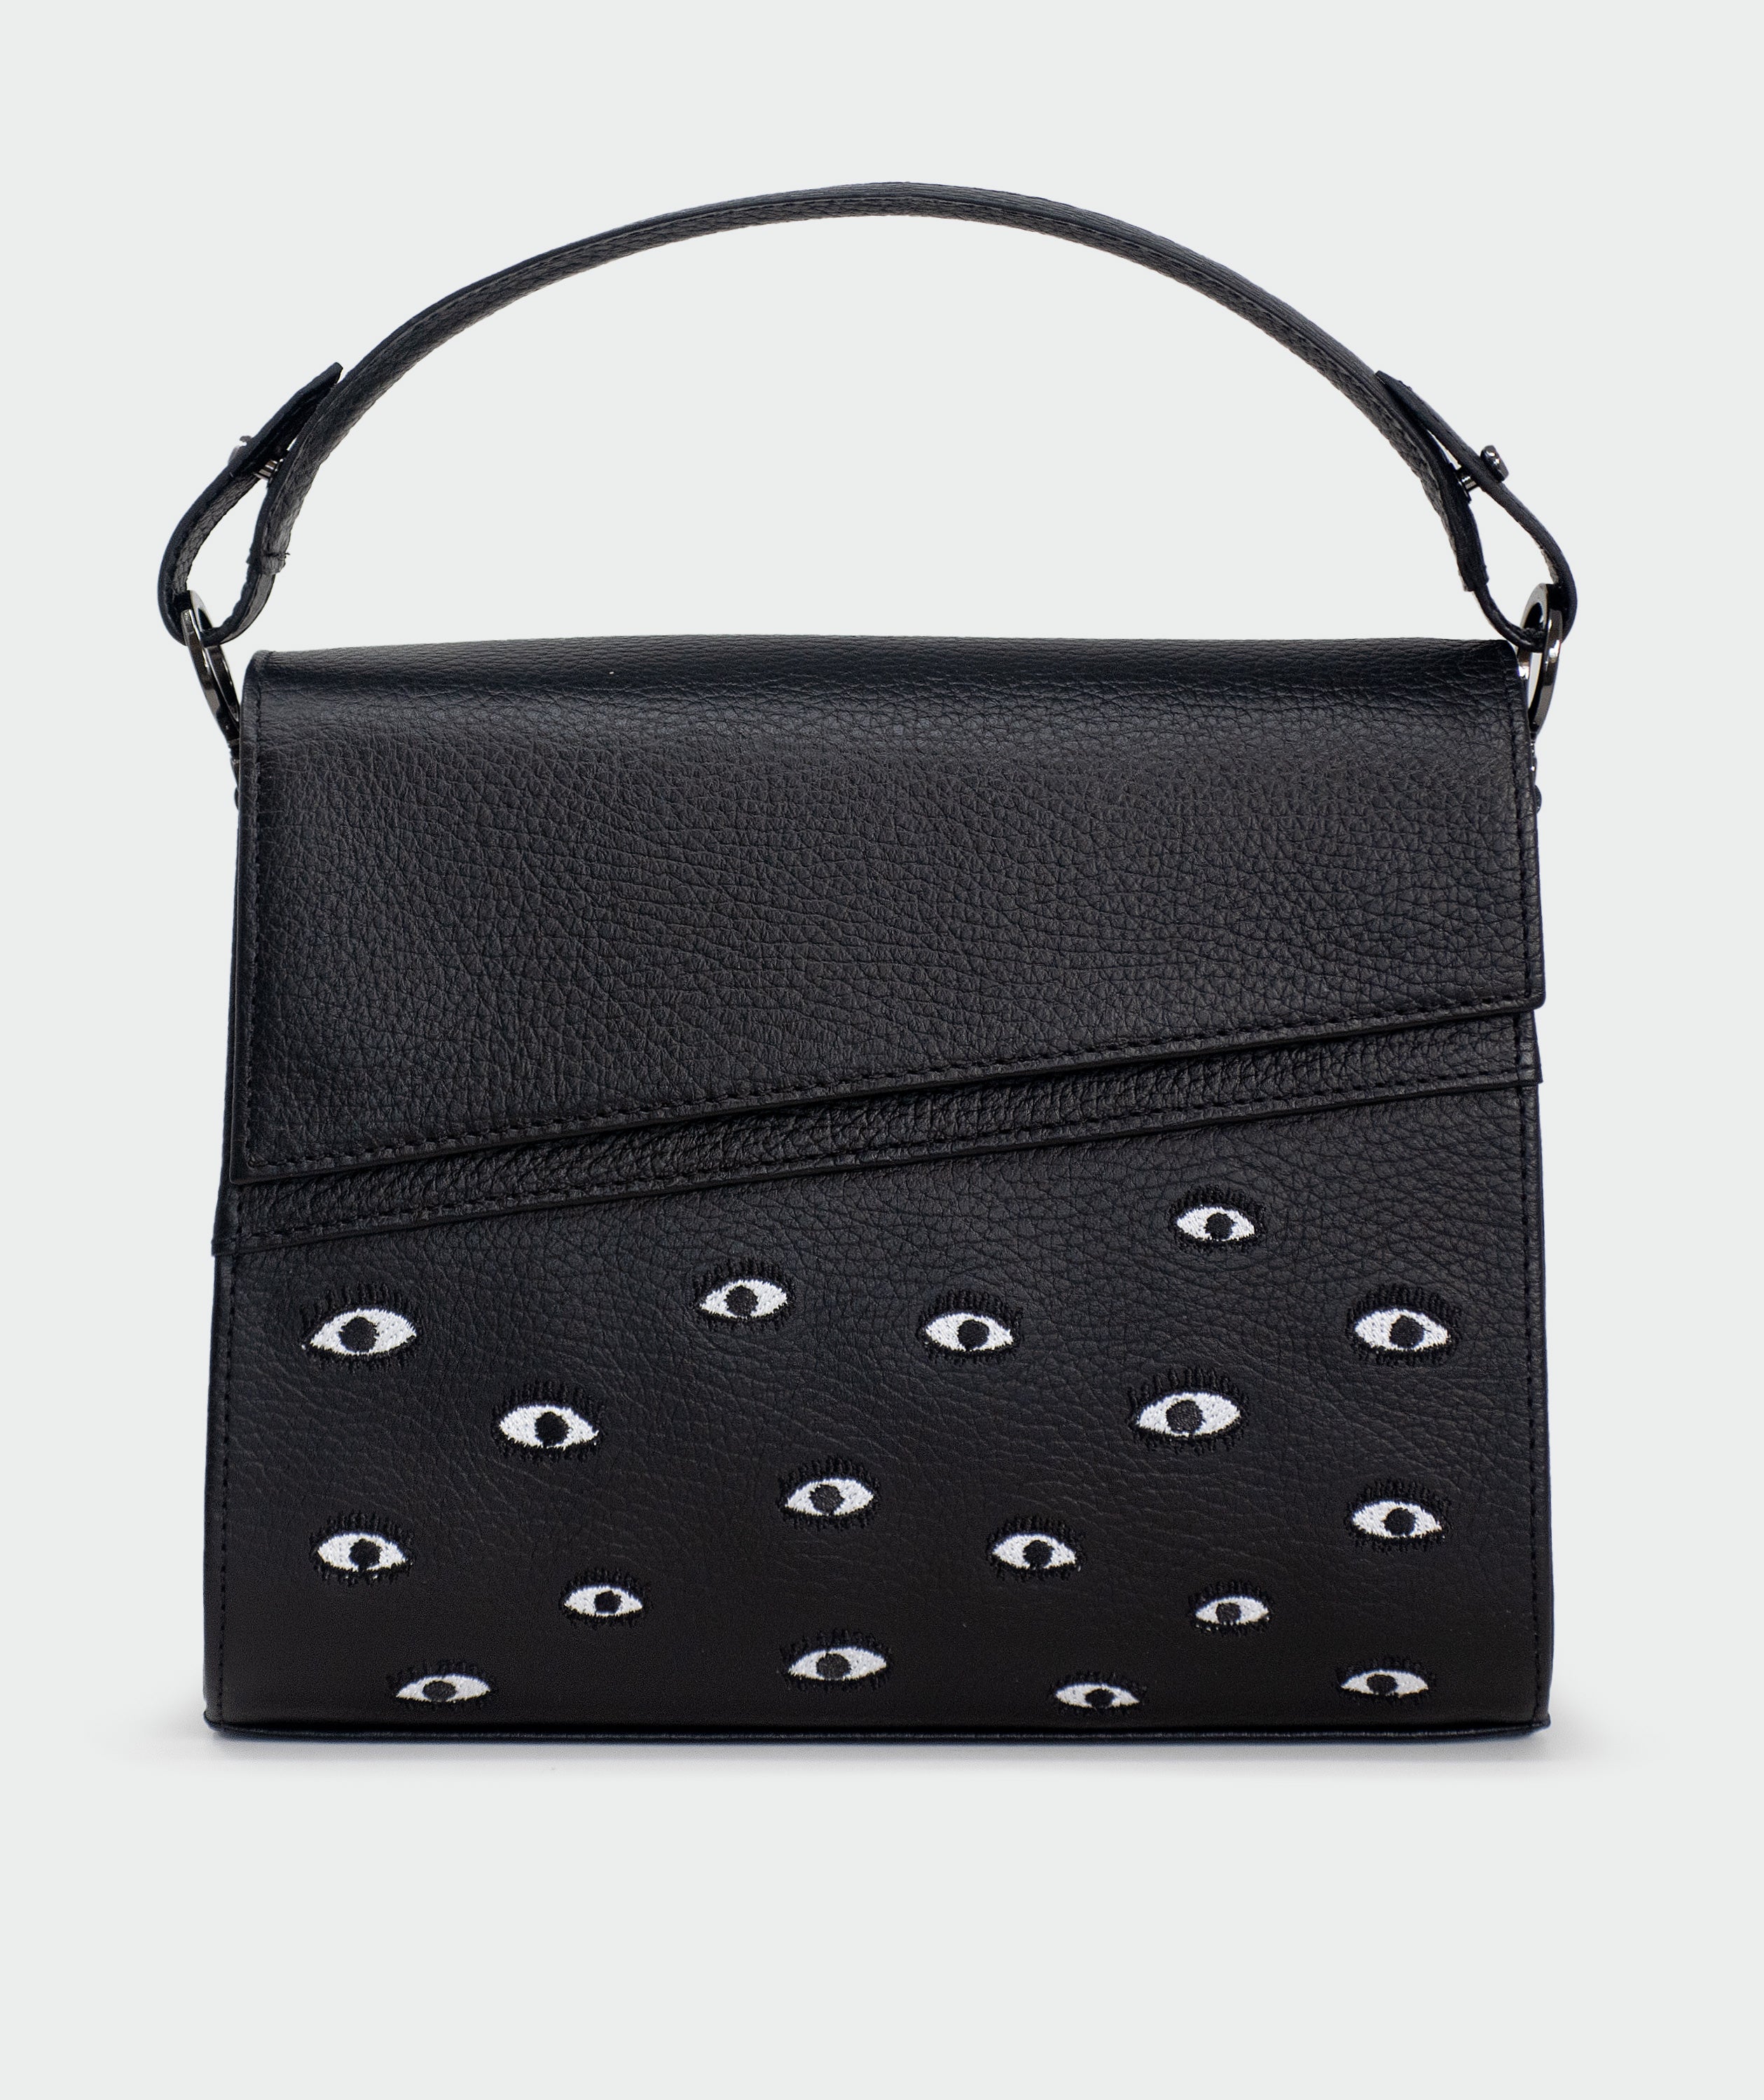 Anastasio Mini Crossbody Handbag Black Leather - All Over Eyes Embroidery - Front view